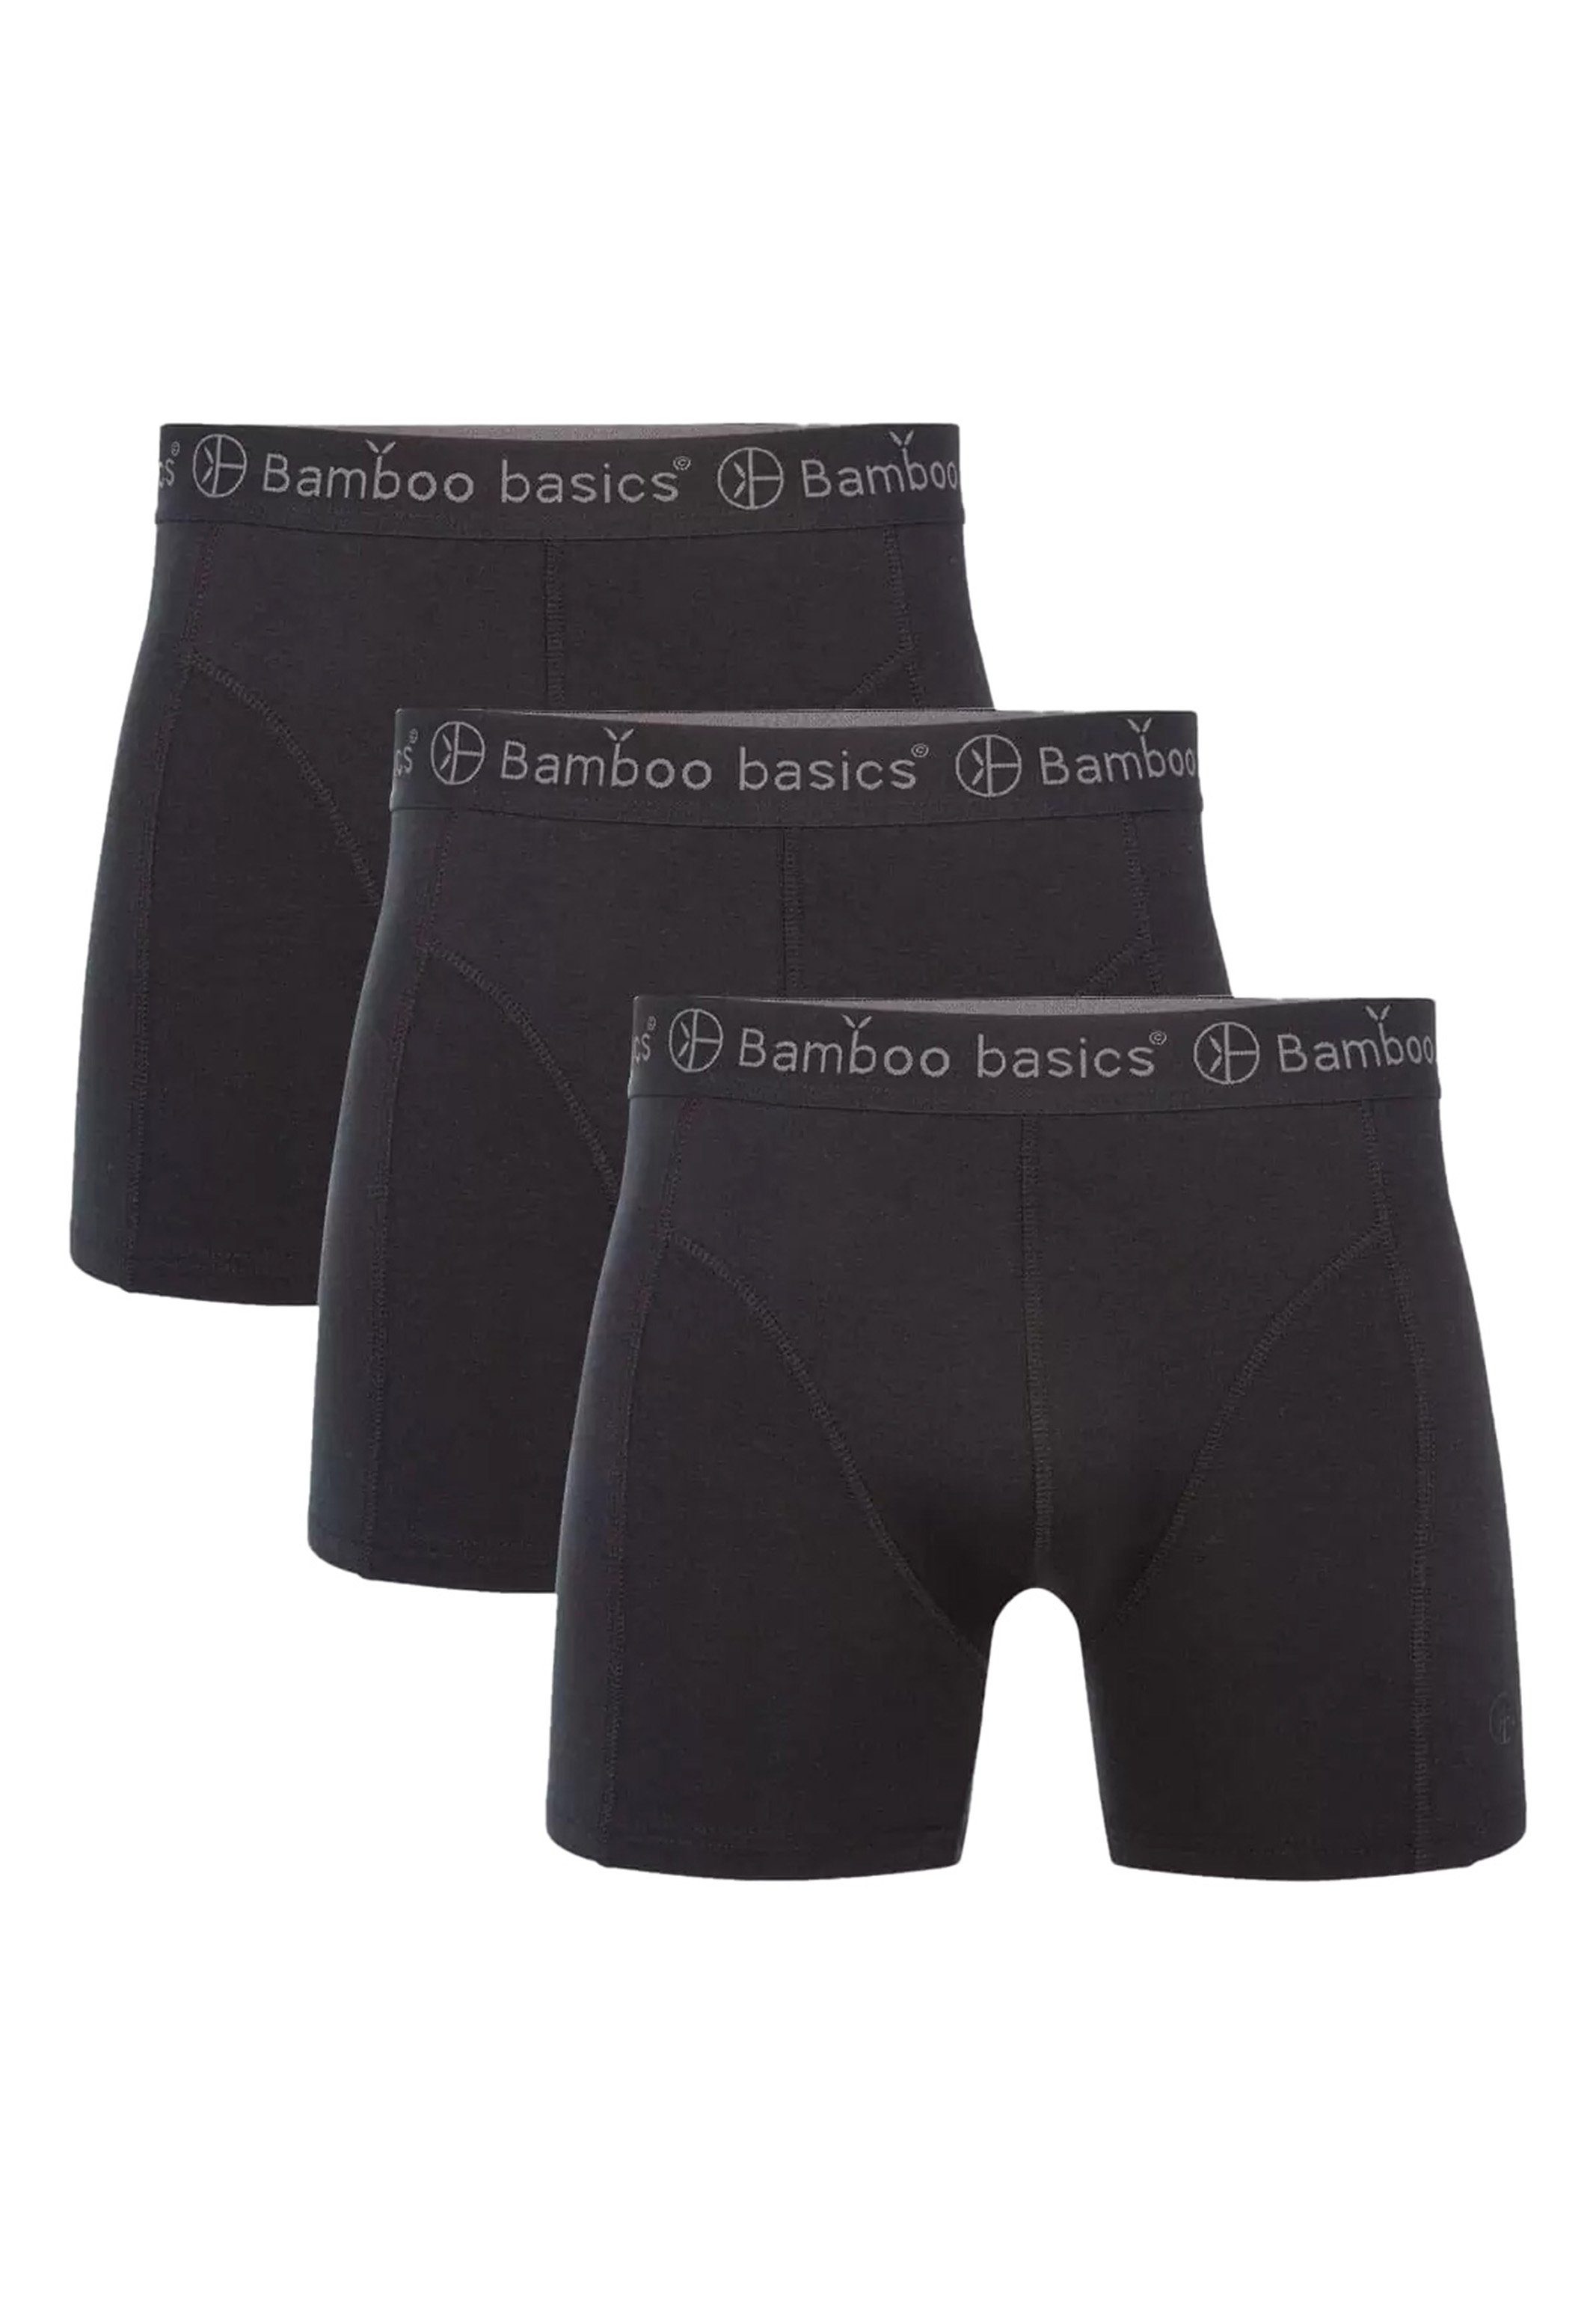 Bamboo basics Retro Boxer 3er Pack Rico (Spar-Set, 3-St) Retro Short / Pant - Ohne Eingriff - Weiches Material mit Viskose Schwarz